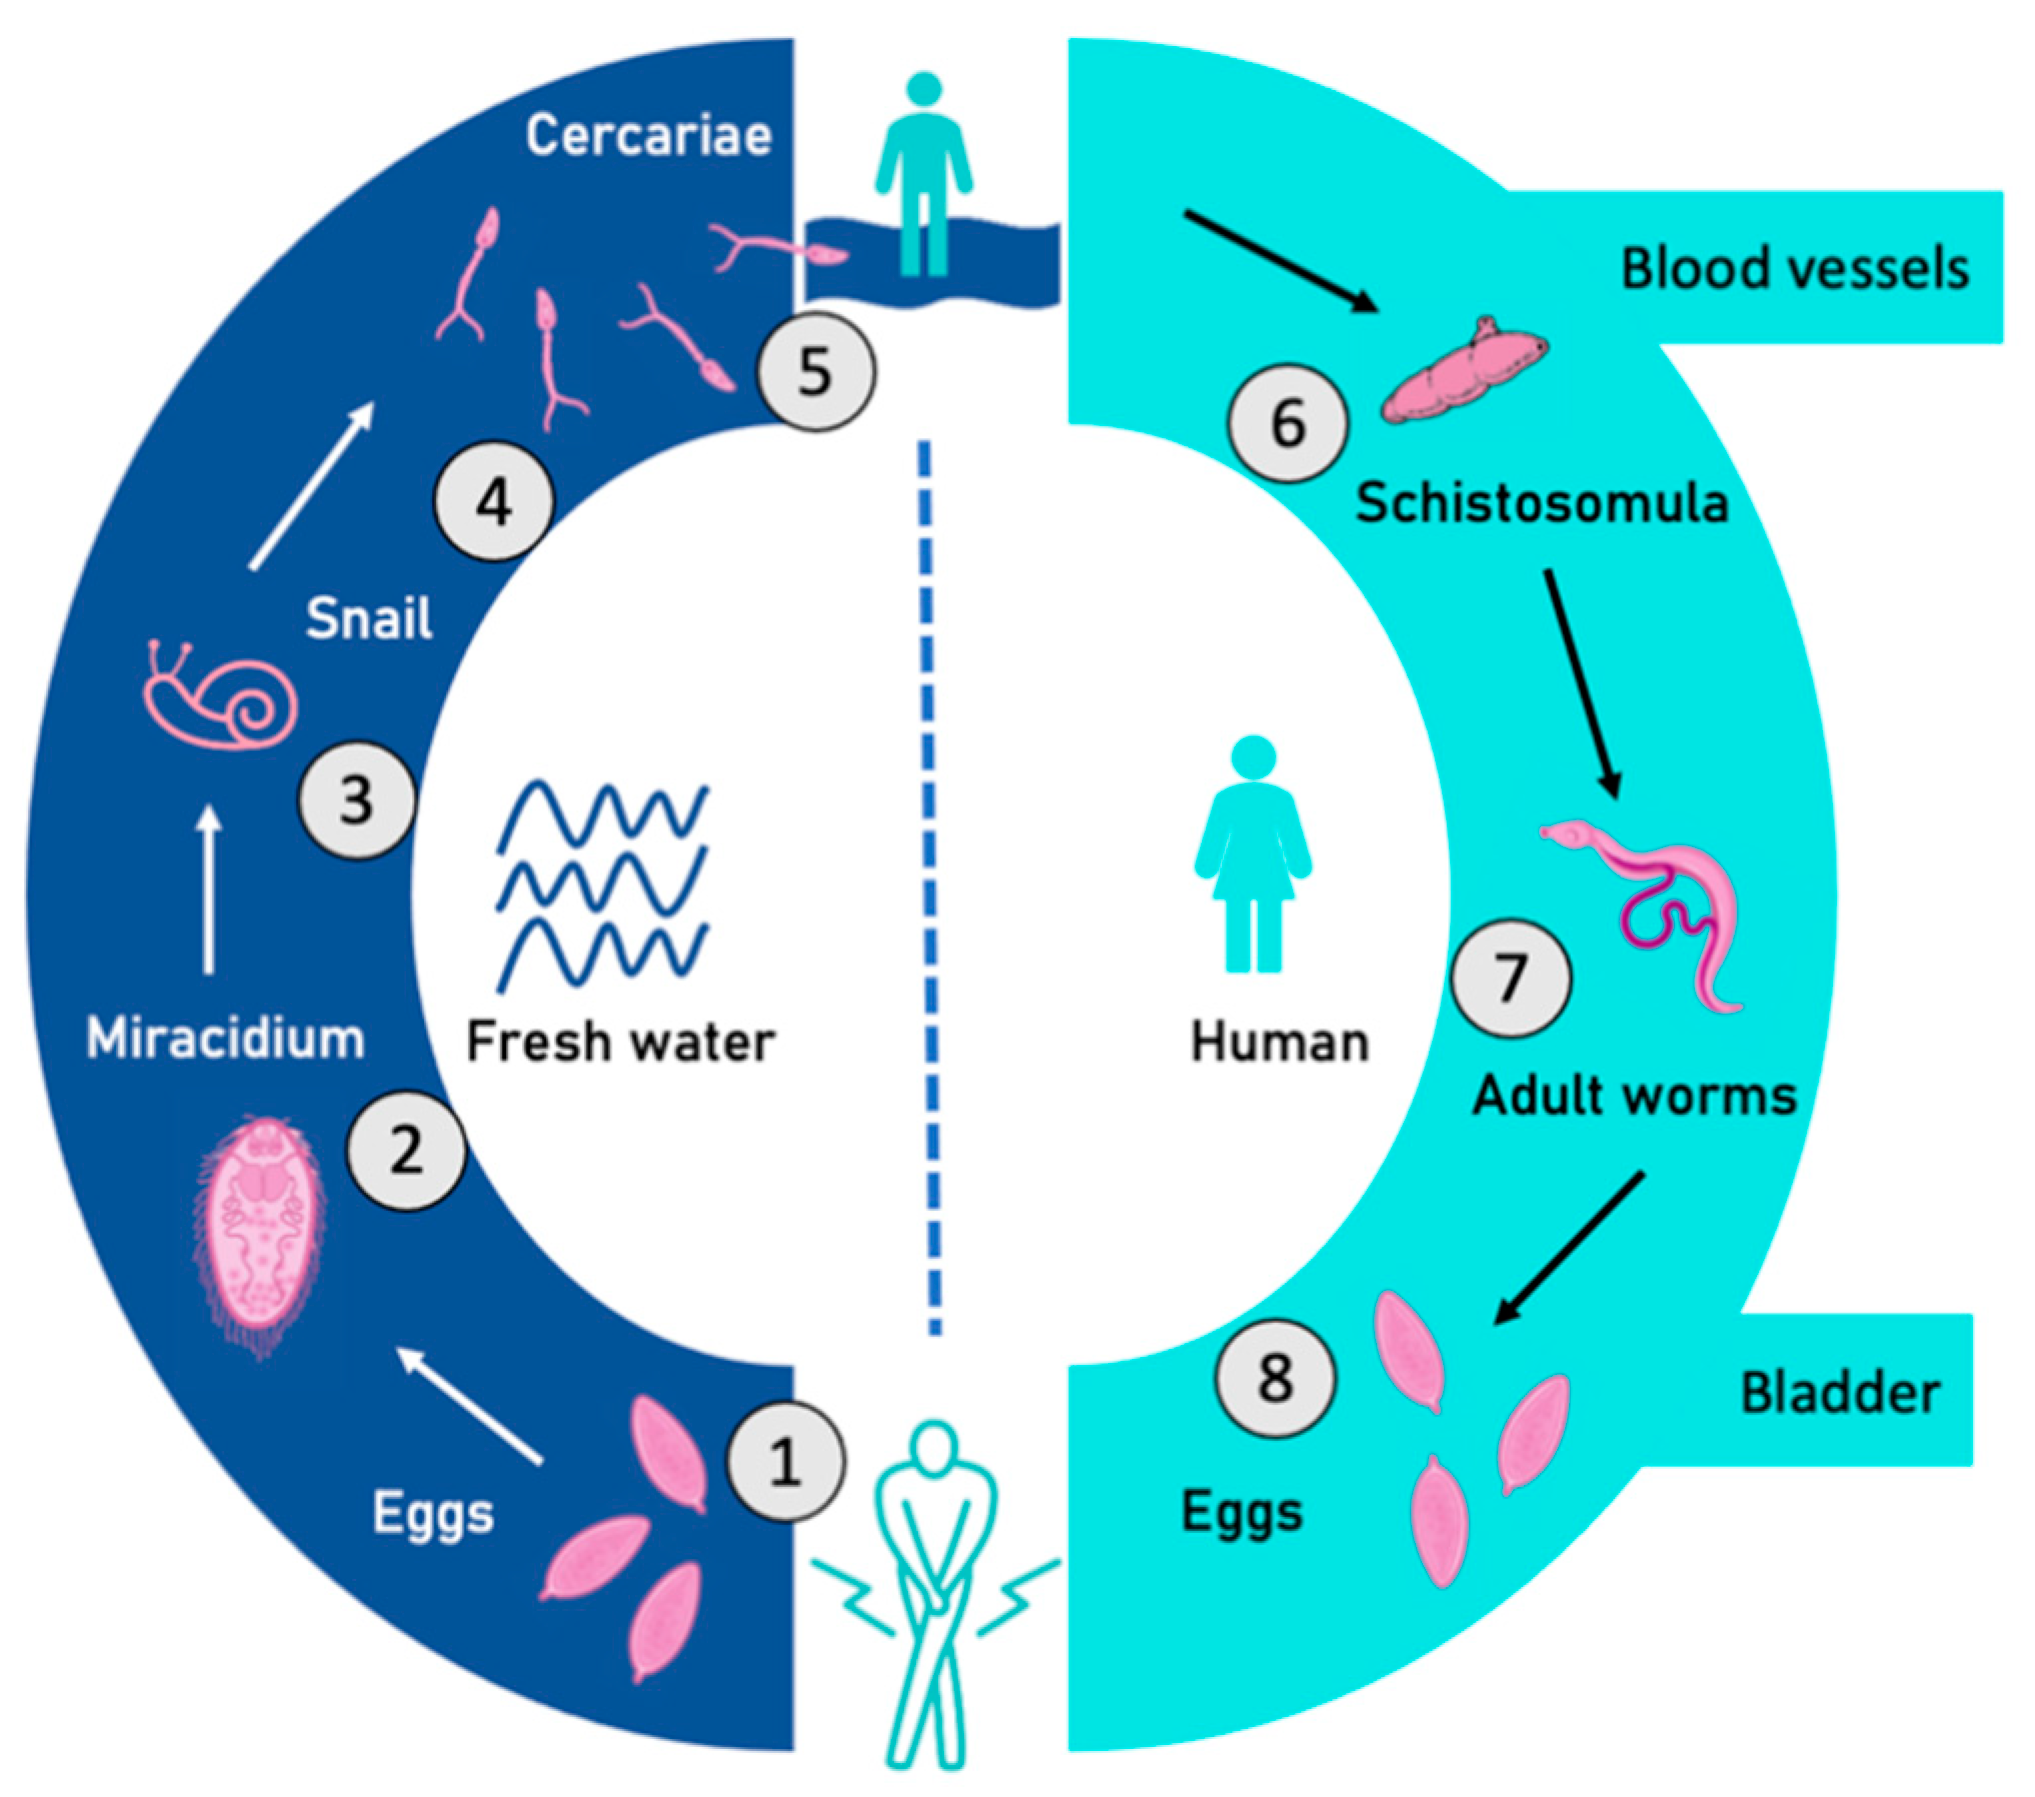 life cycle of schistosomiasis parasite